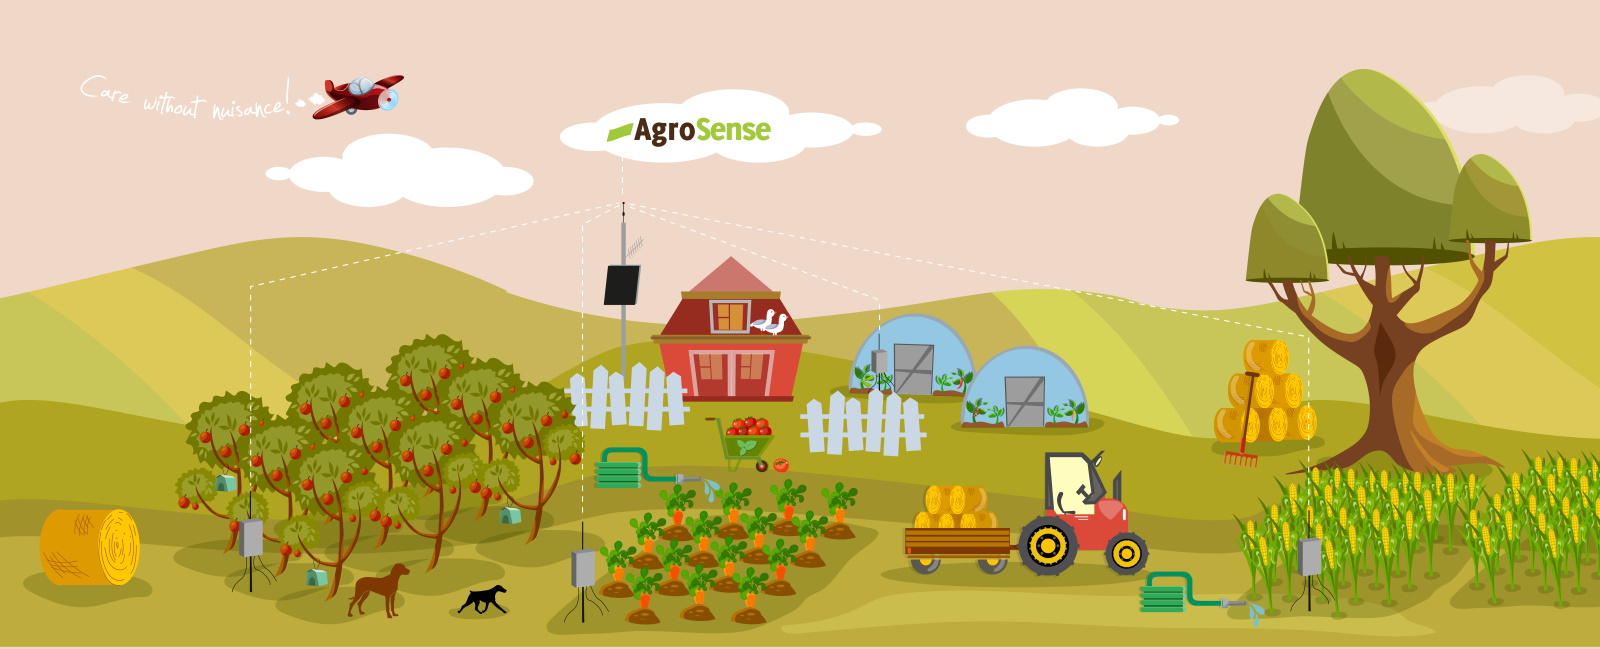 AgroSense Farm EN